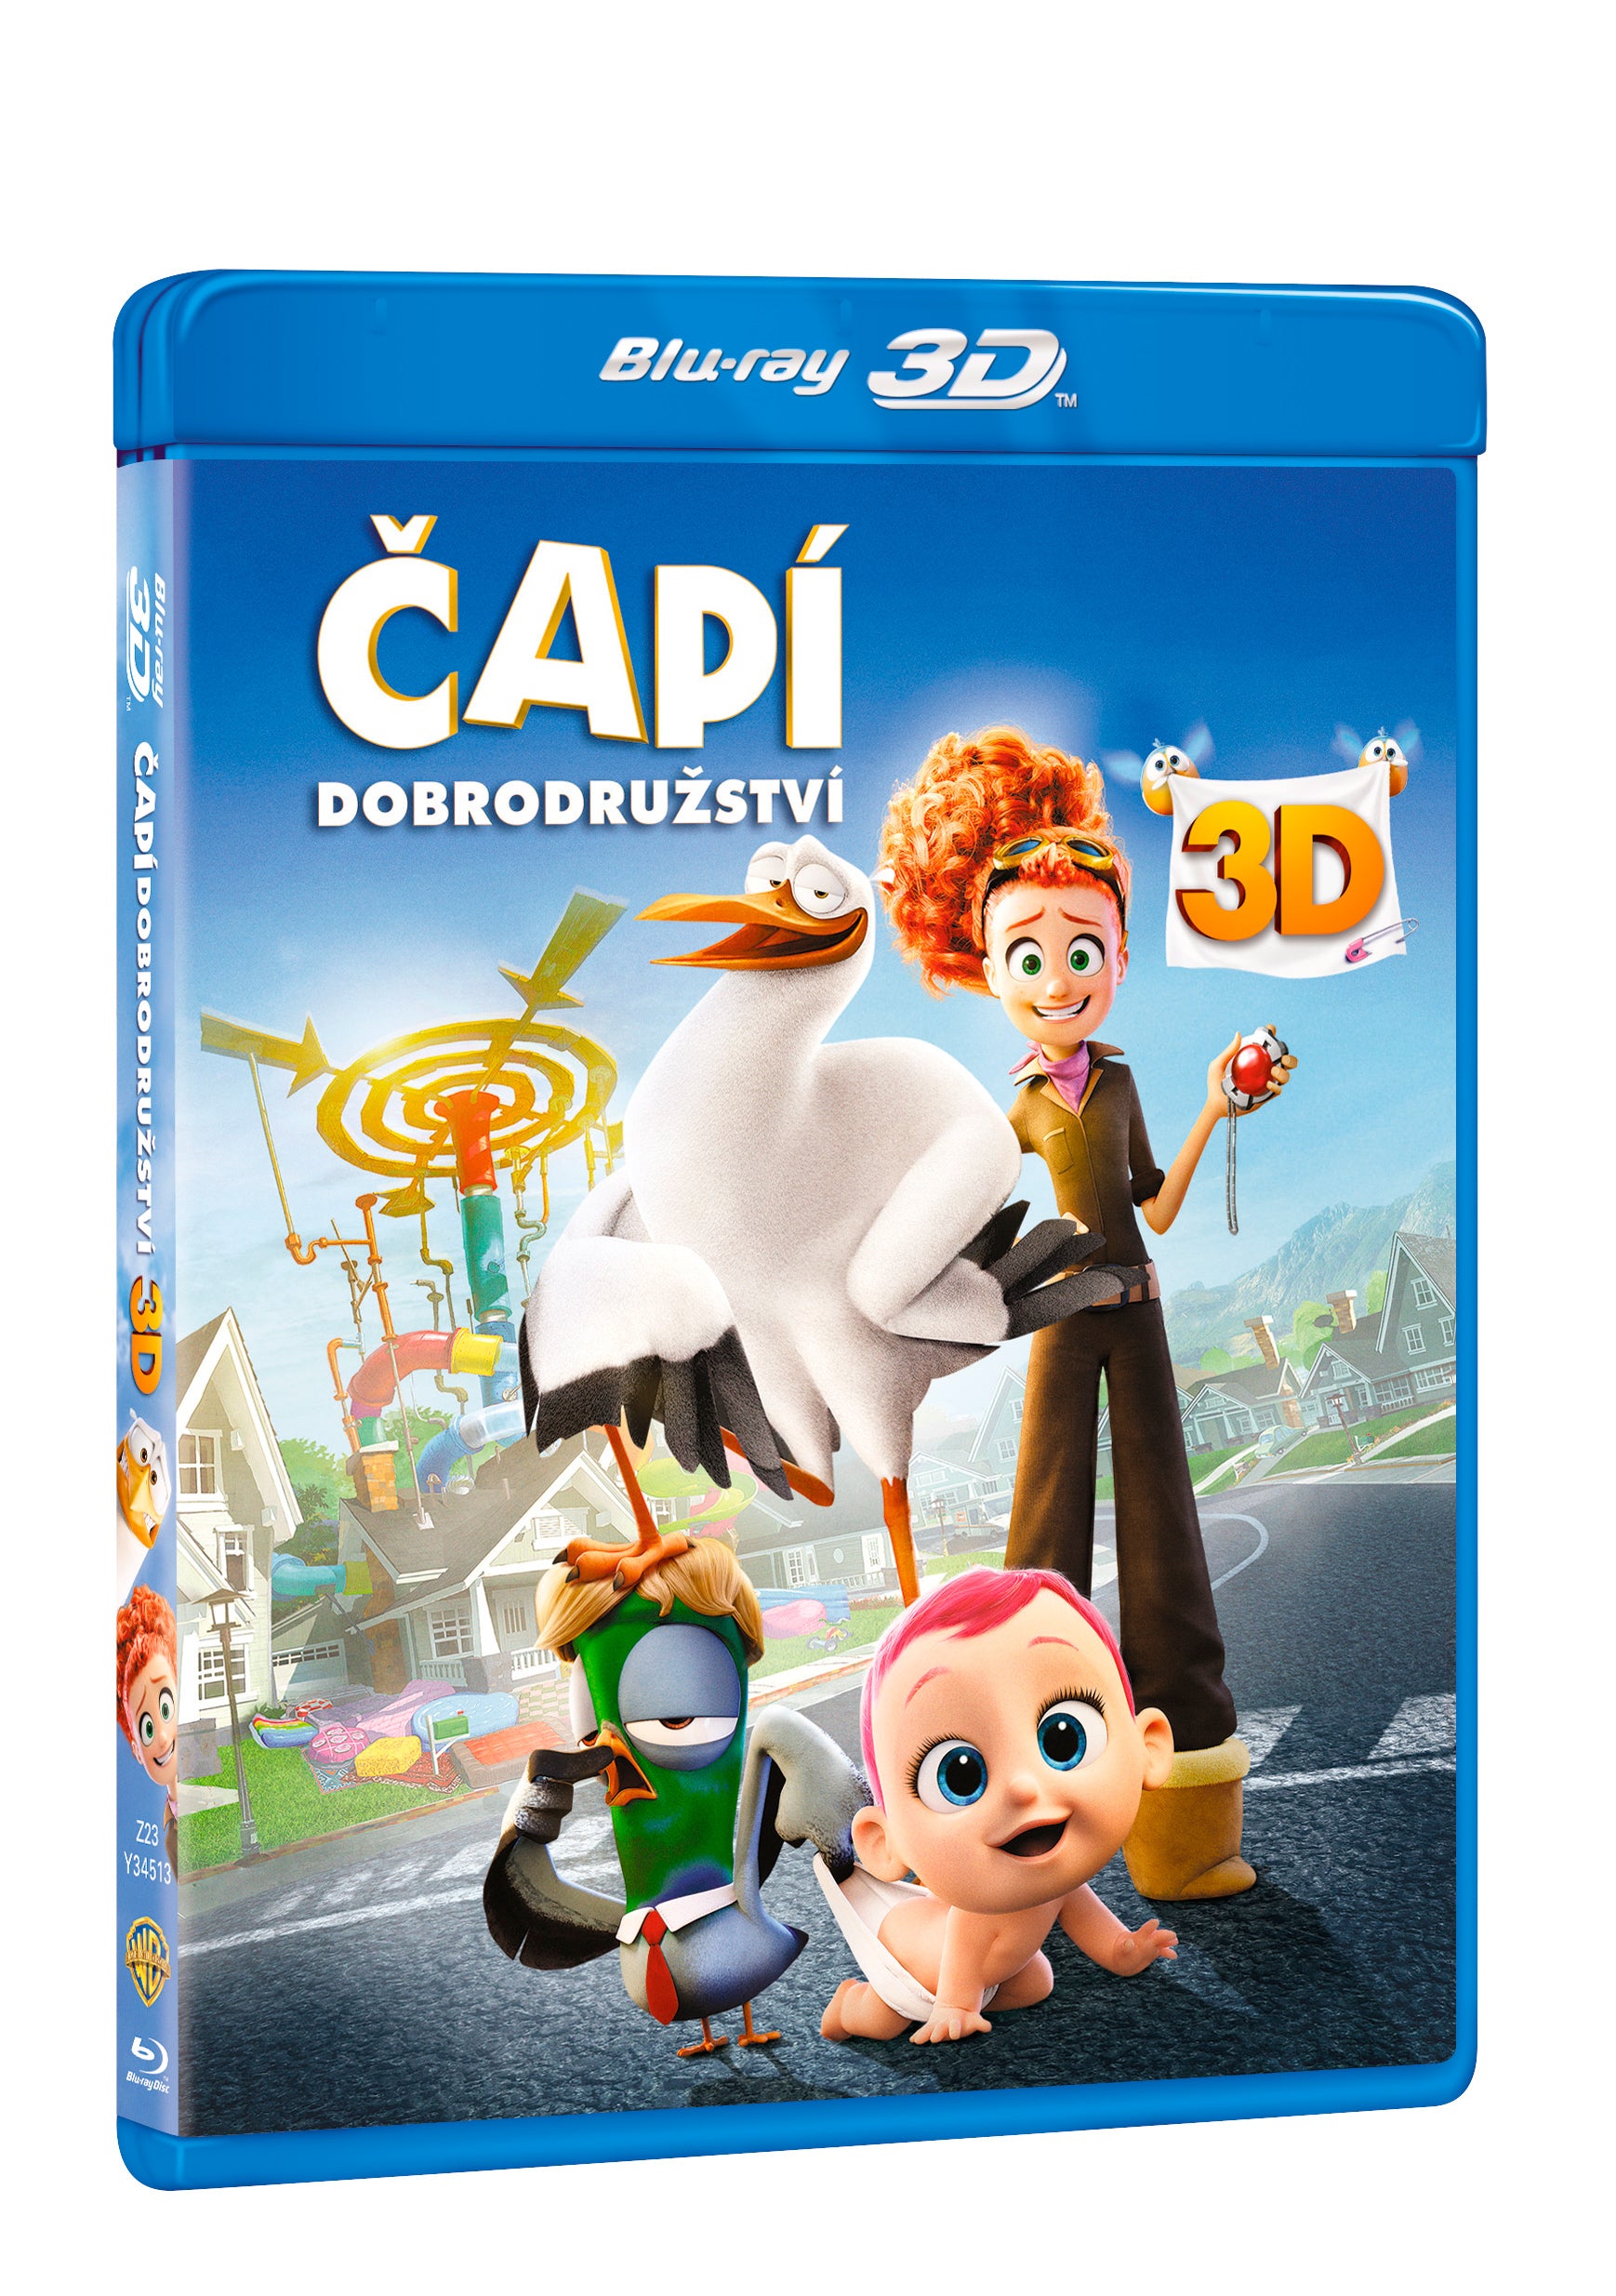 Capi dobrodruzstvi 2BD (3D+2D) / Storks - Czech version